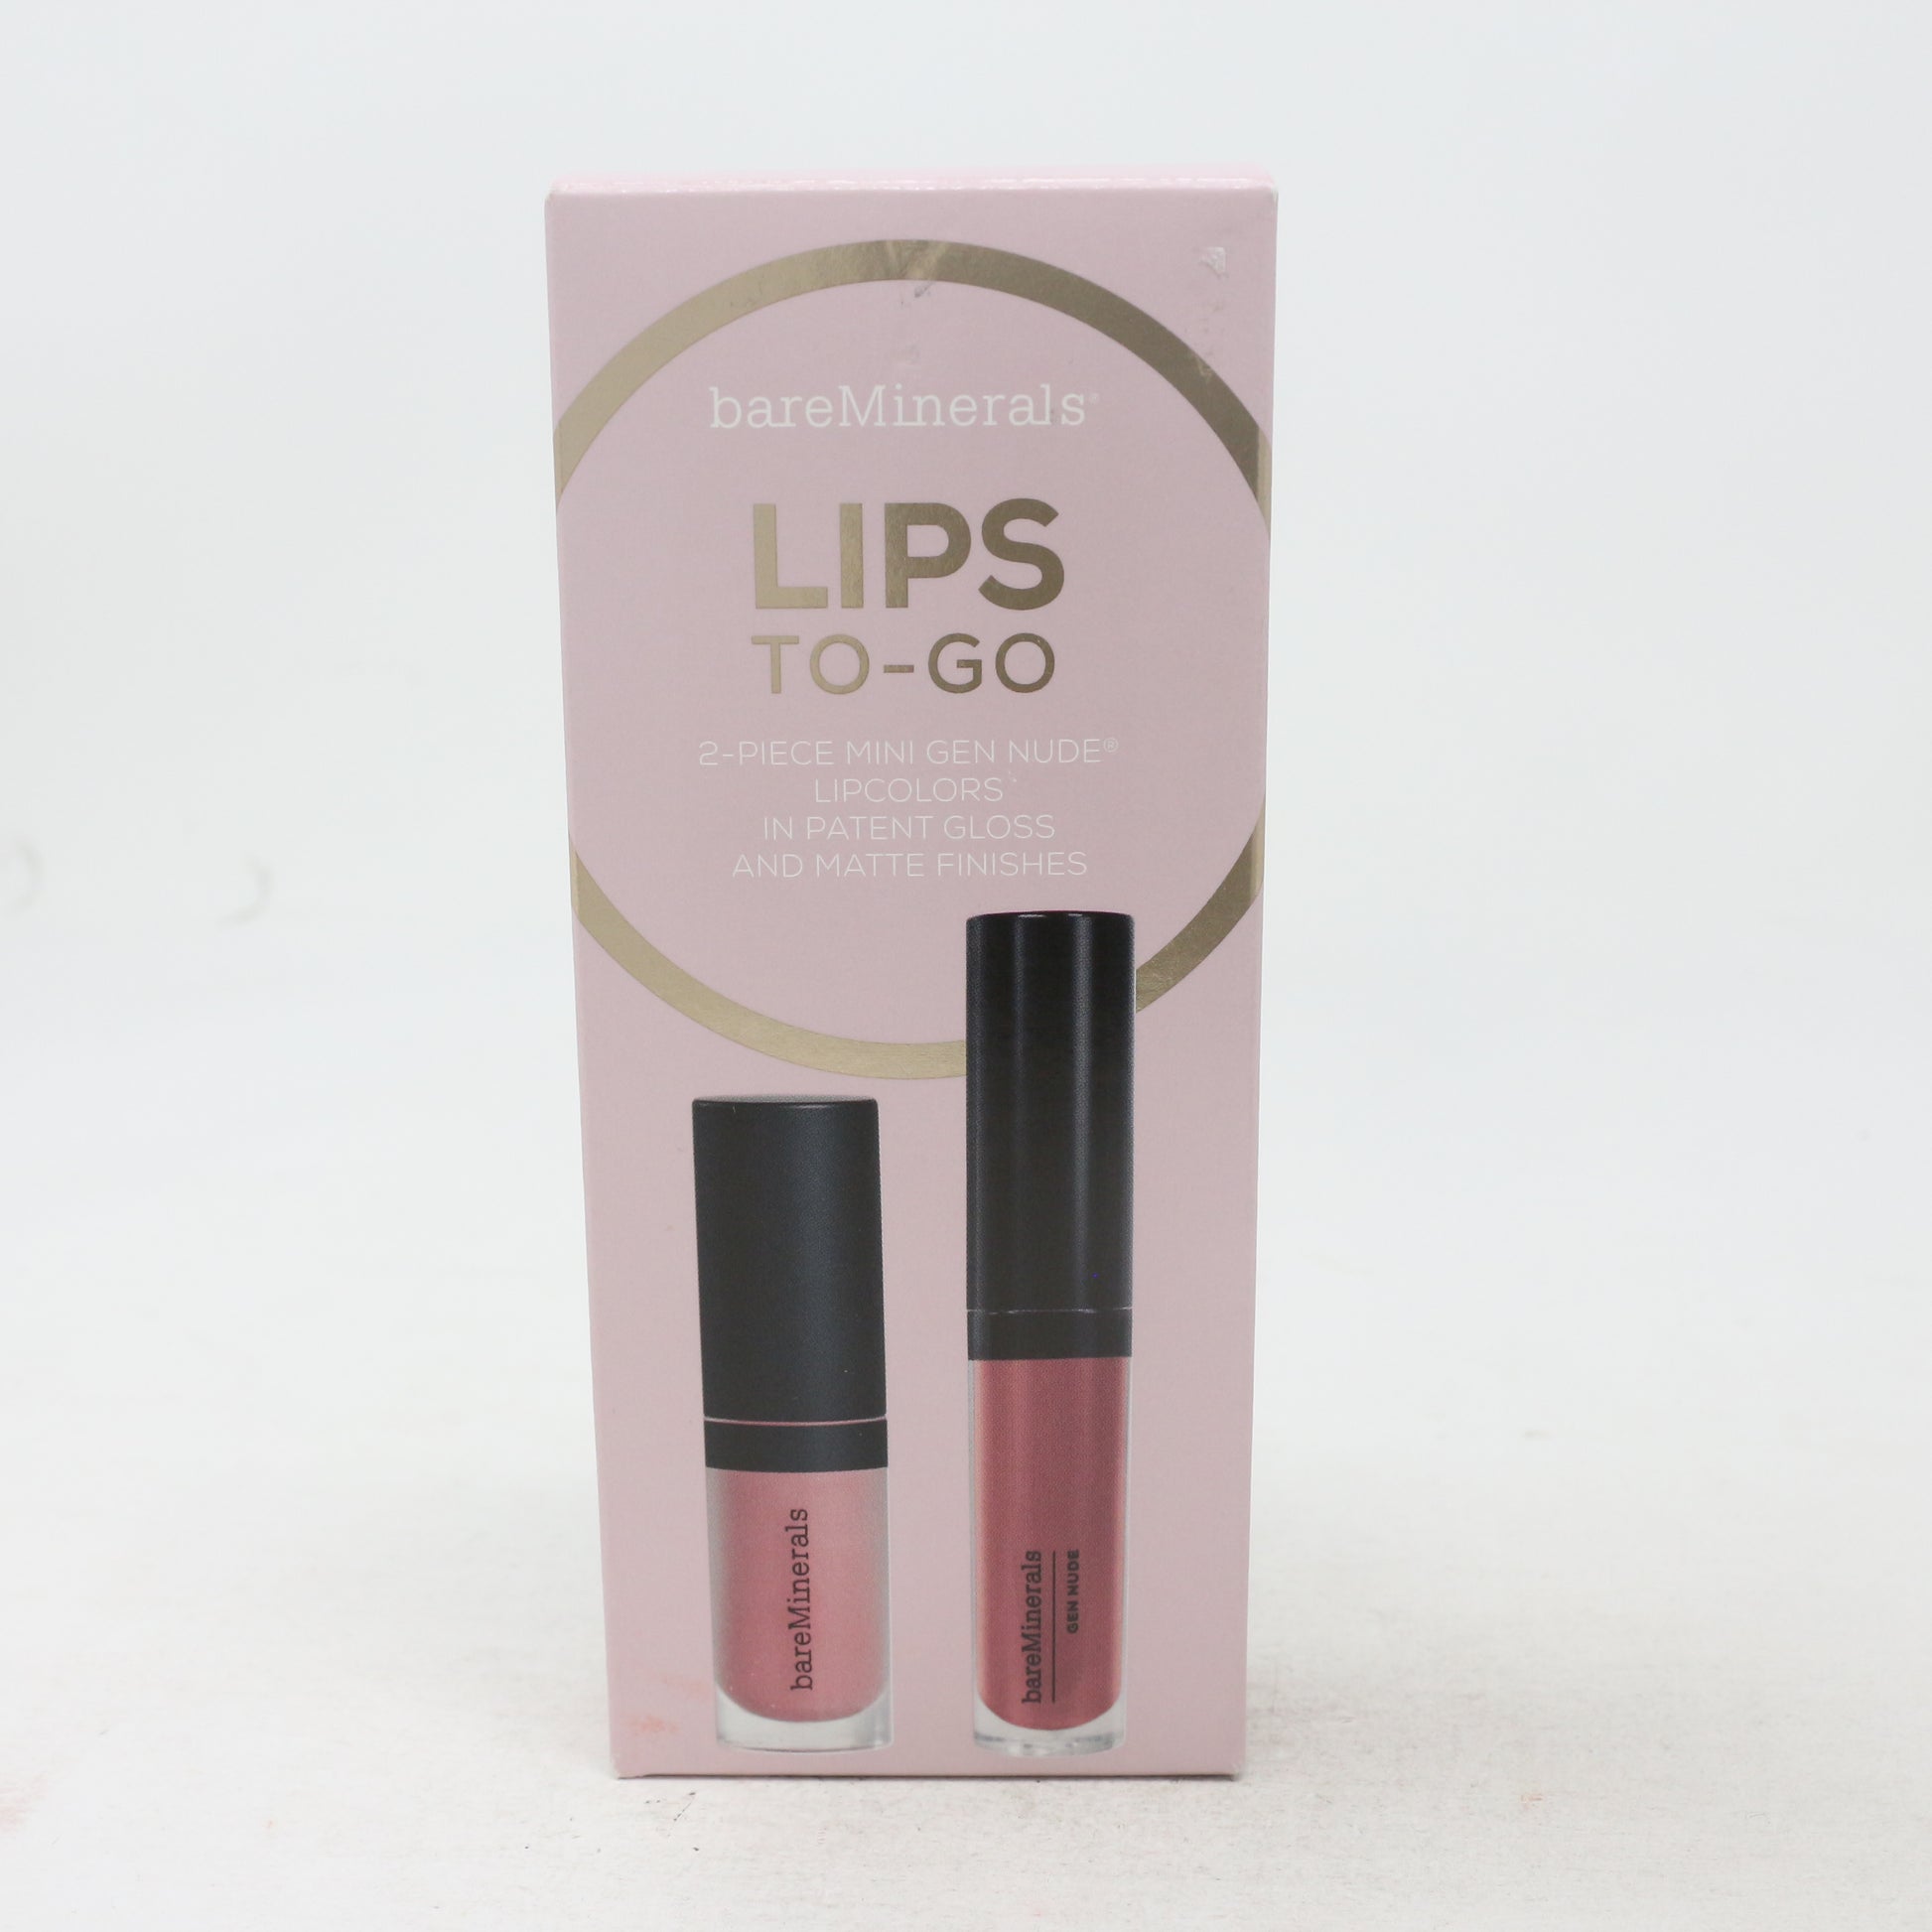 Lips To-Go 2-Piece Mini Gen Nude Lipcolor